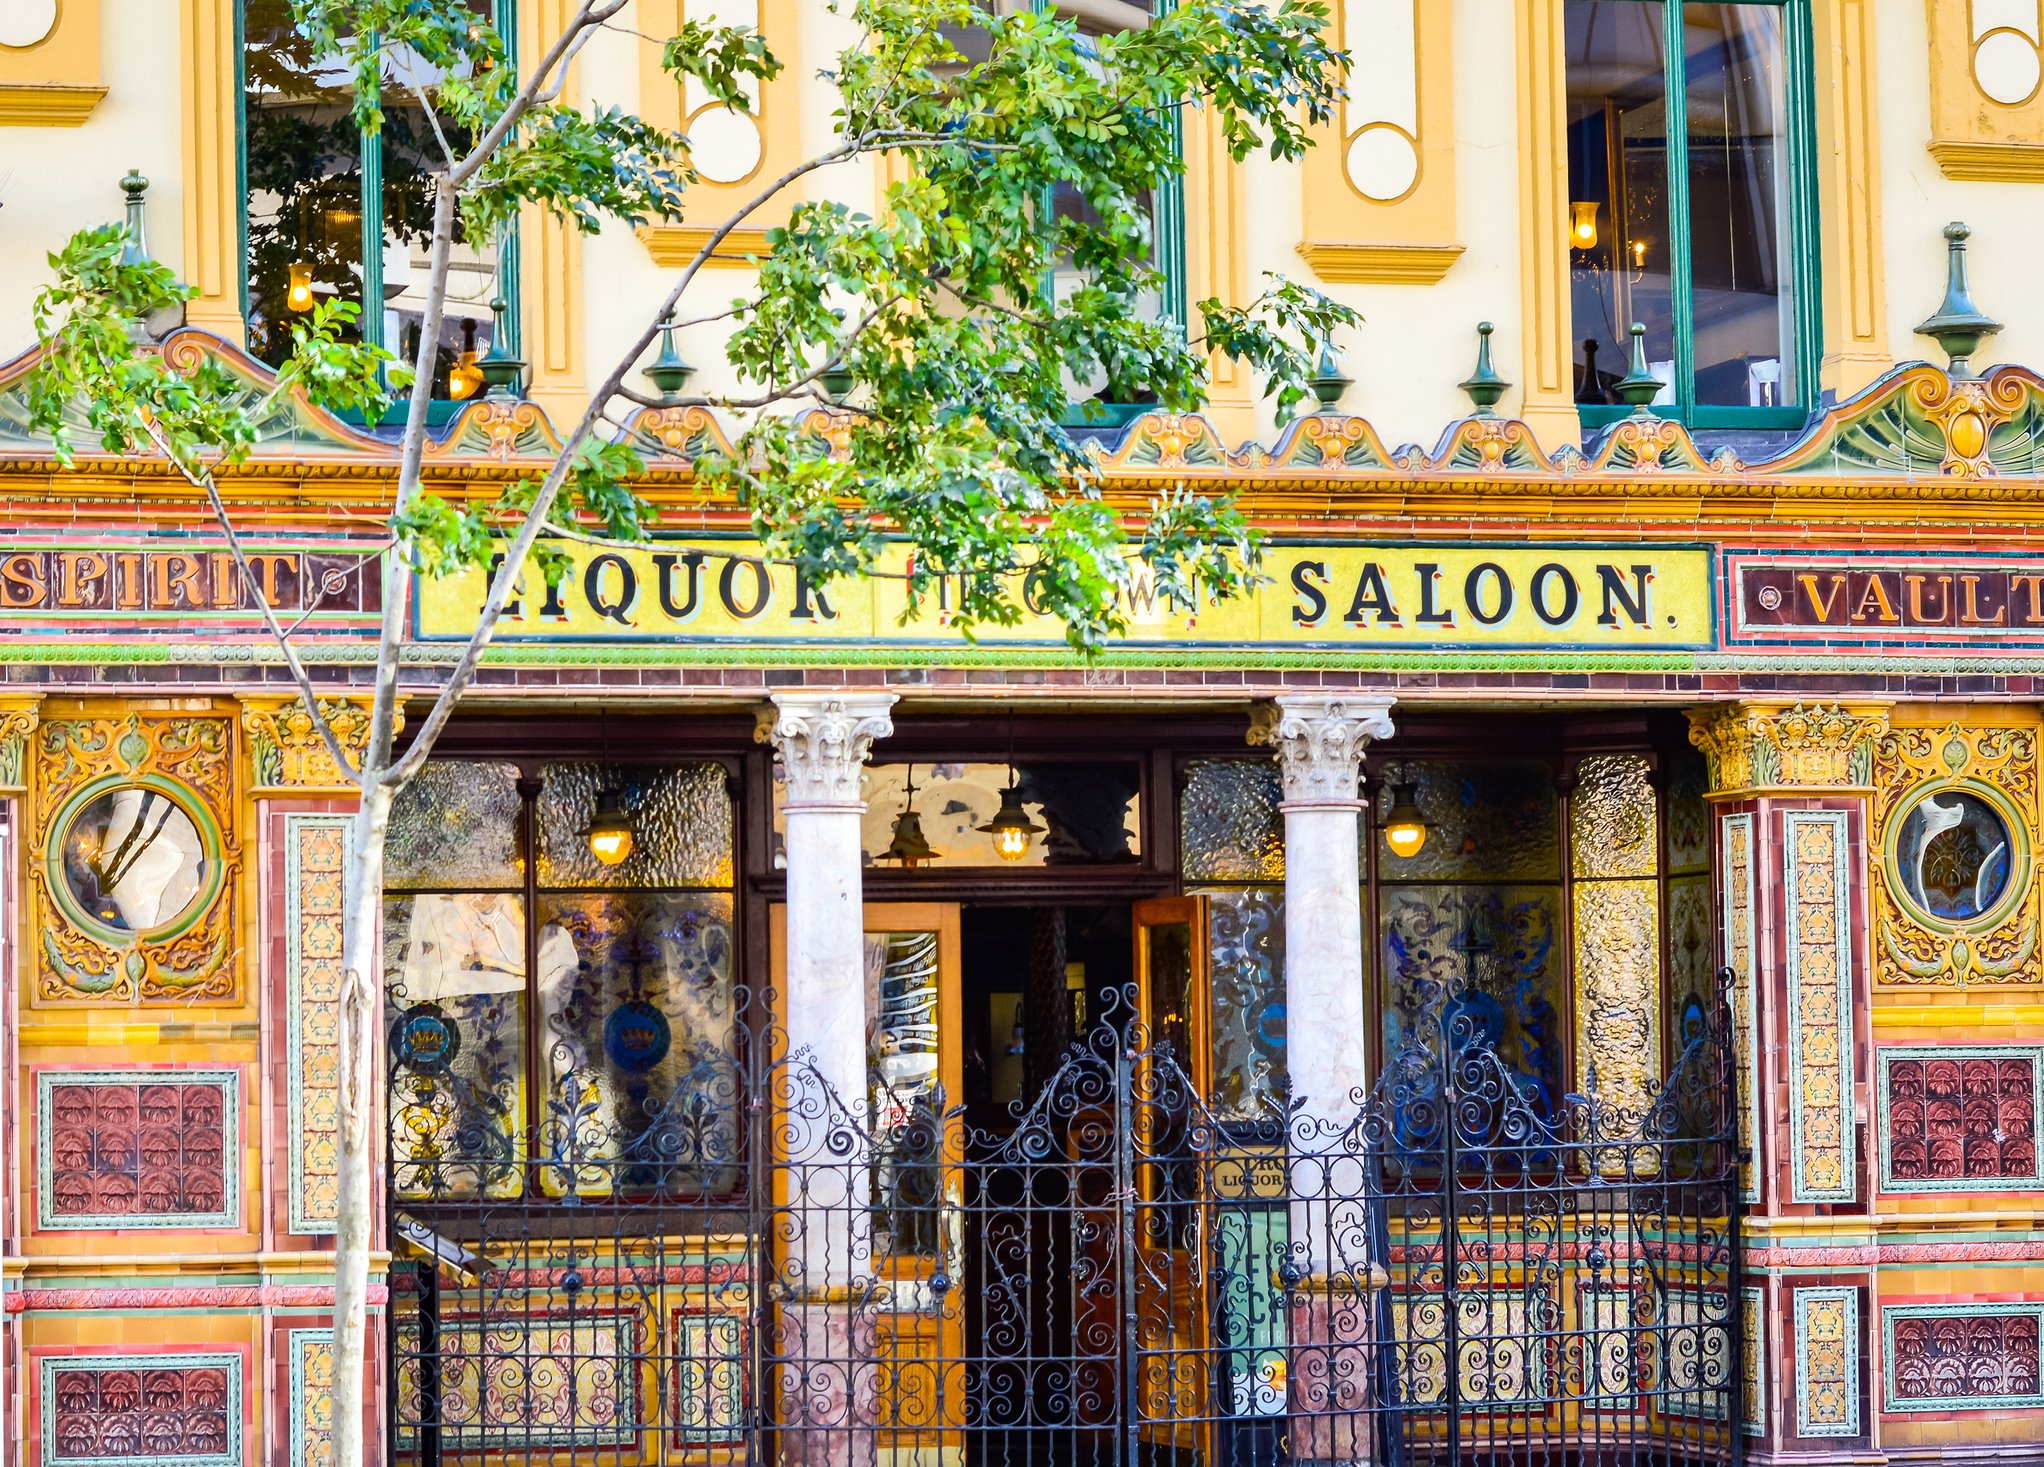 The Crown Liquor Saloon,